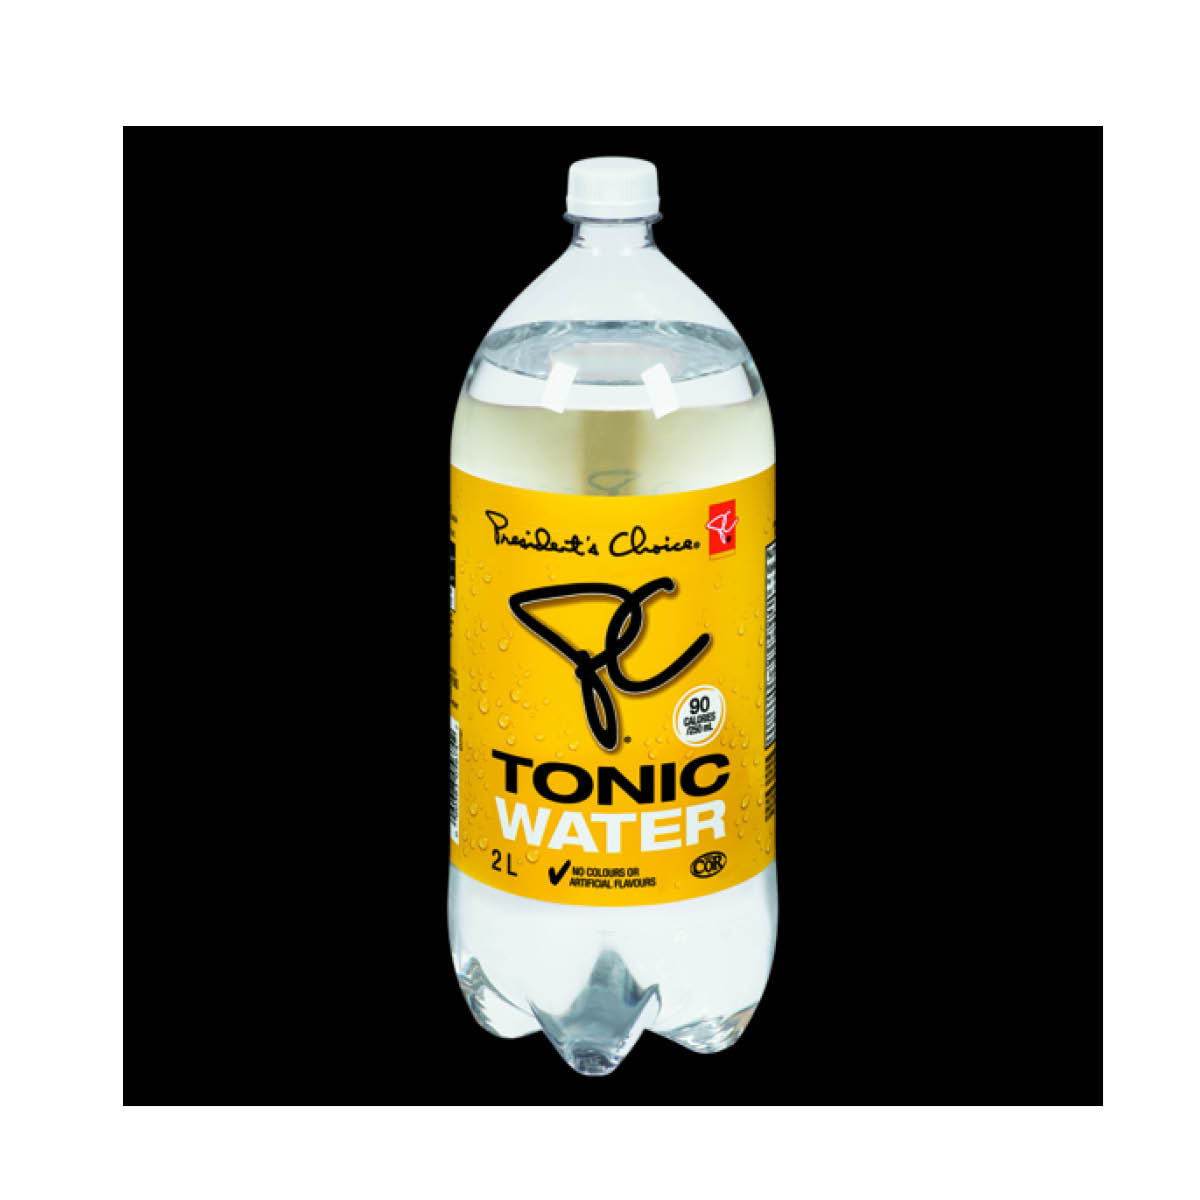 PC Tonic Water, 2L